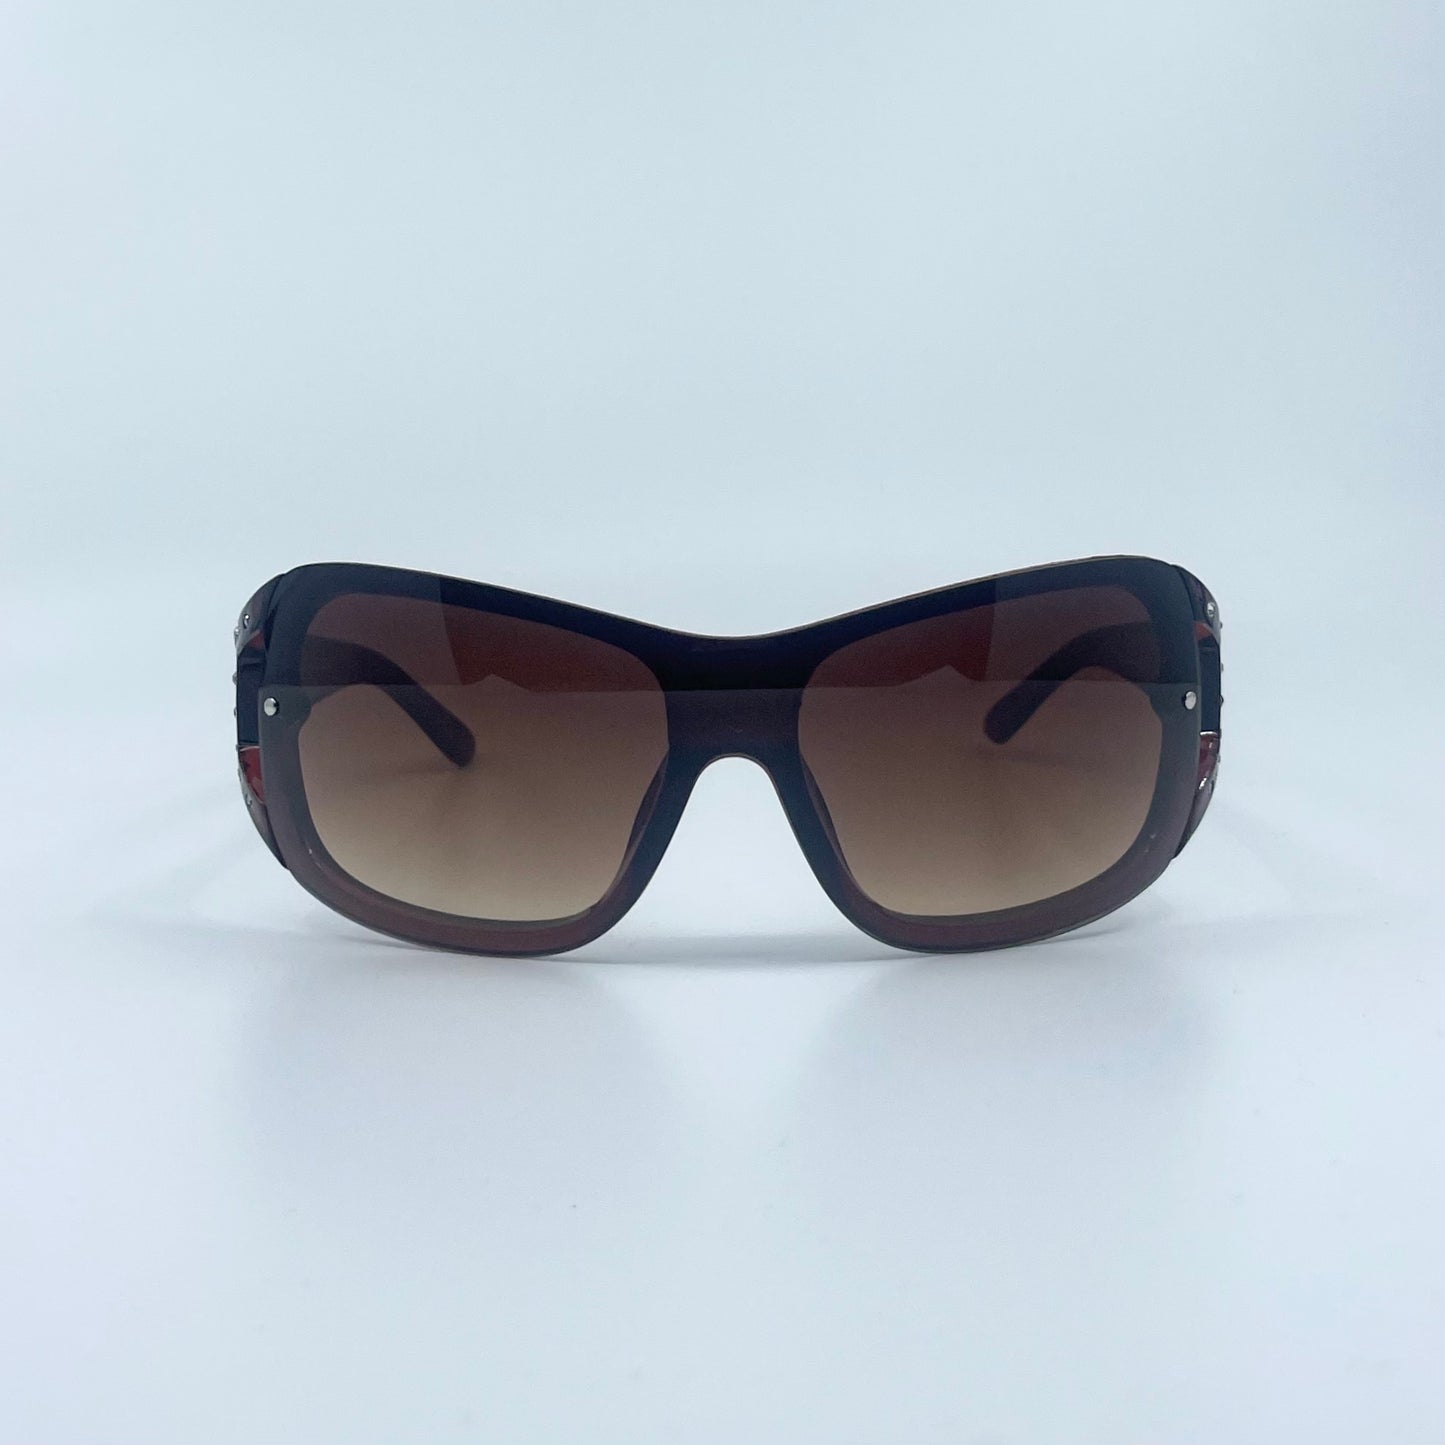 "Butterfly Effect" Wrap Sunglasses